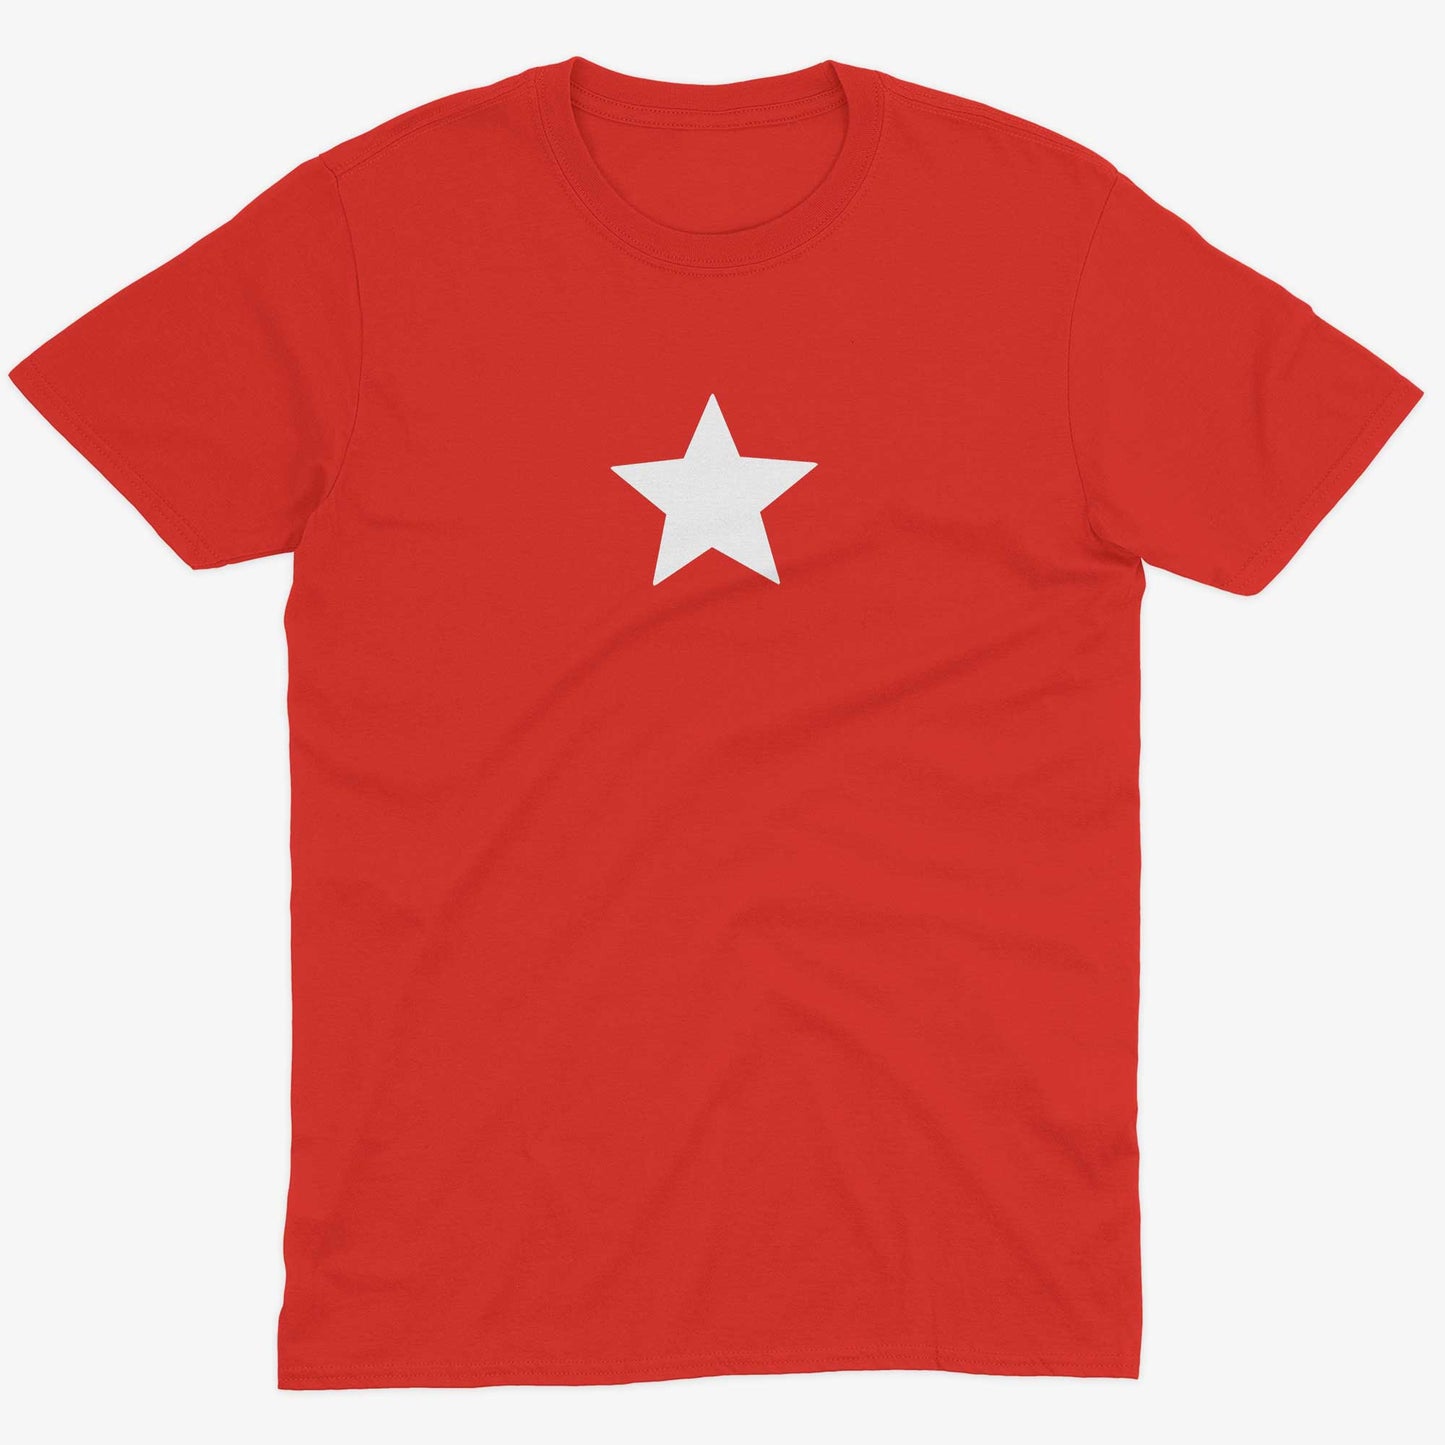 Star Unisex Or Women's Cotton T-shirt-